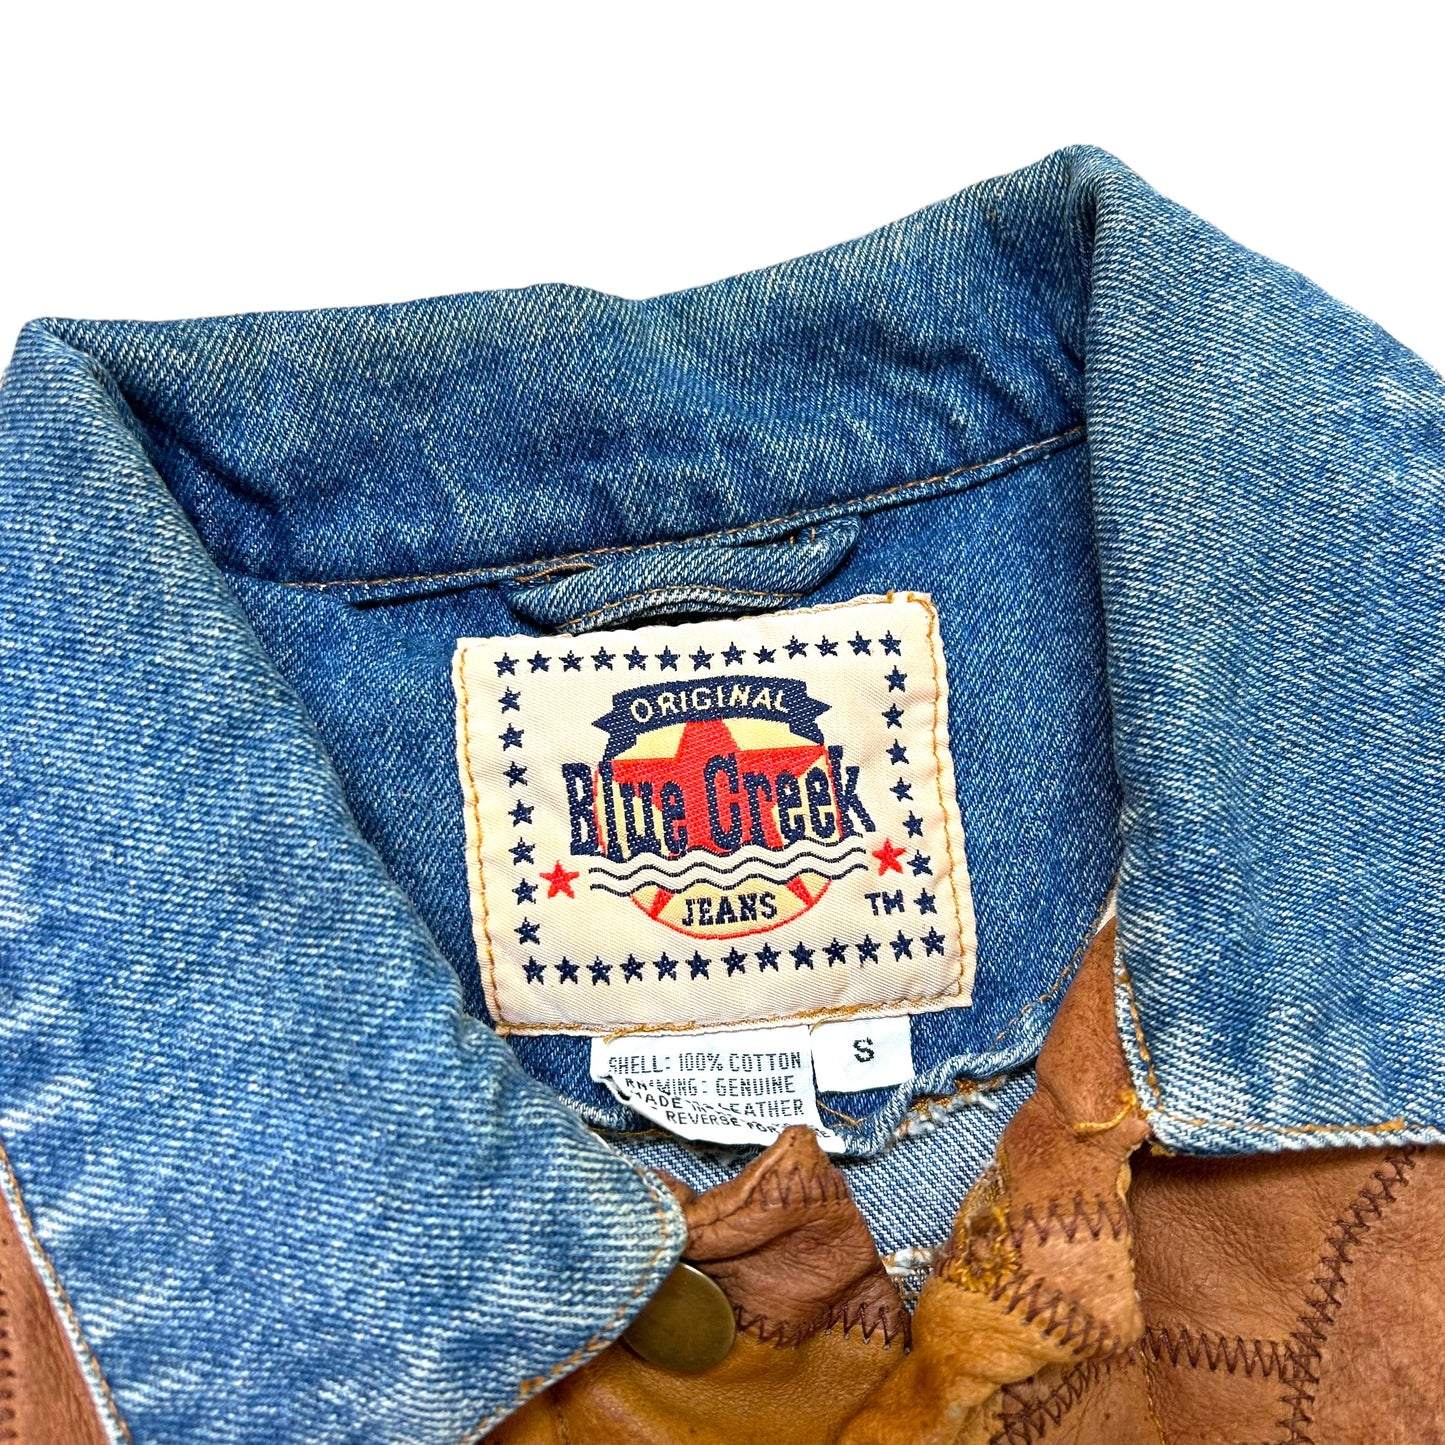 Vintage 1990s Blue Creek Jeans Light Wash Denim/Leather Button Up Jacket - Size Small